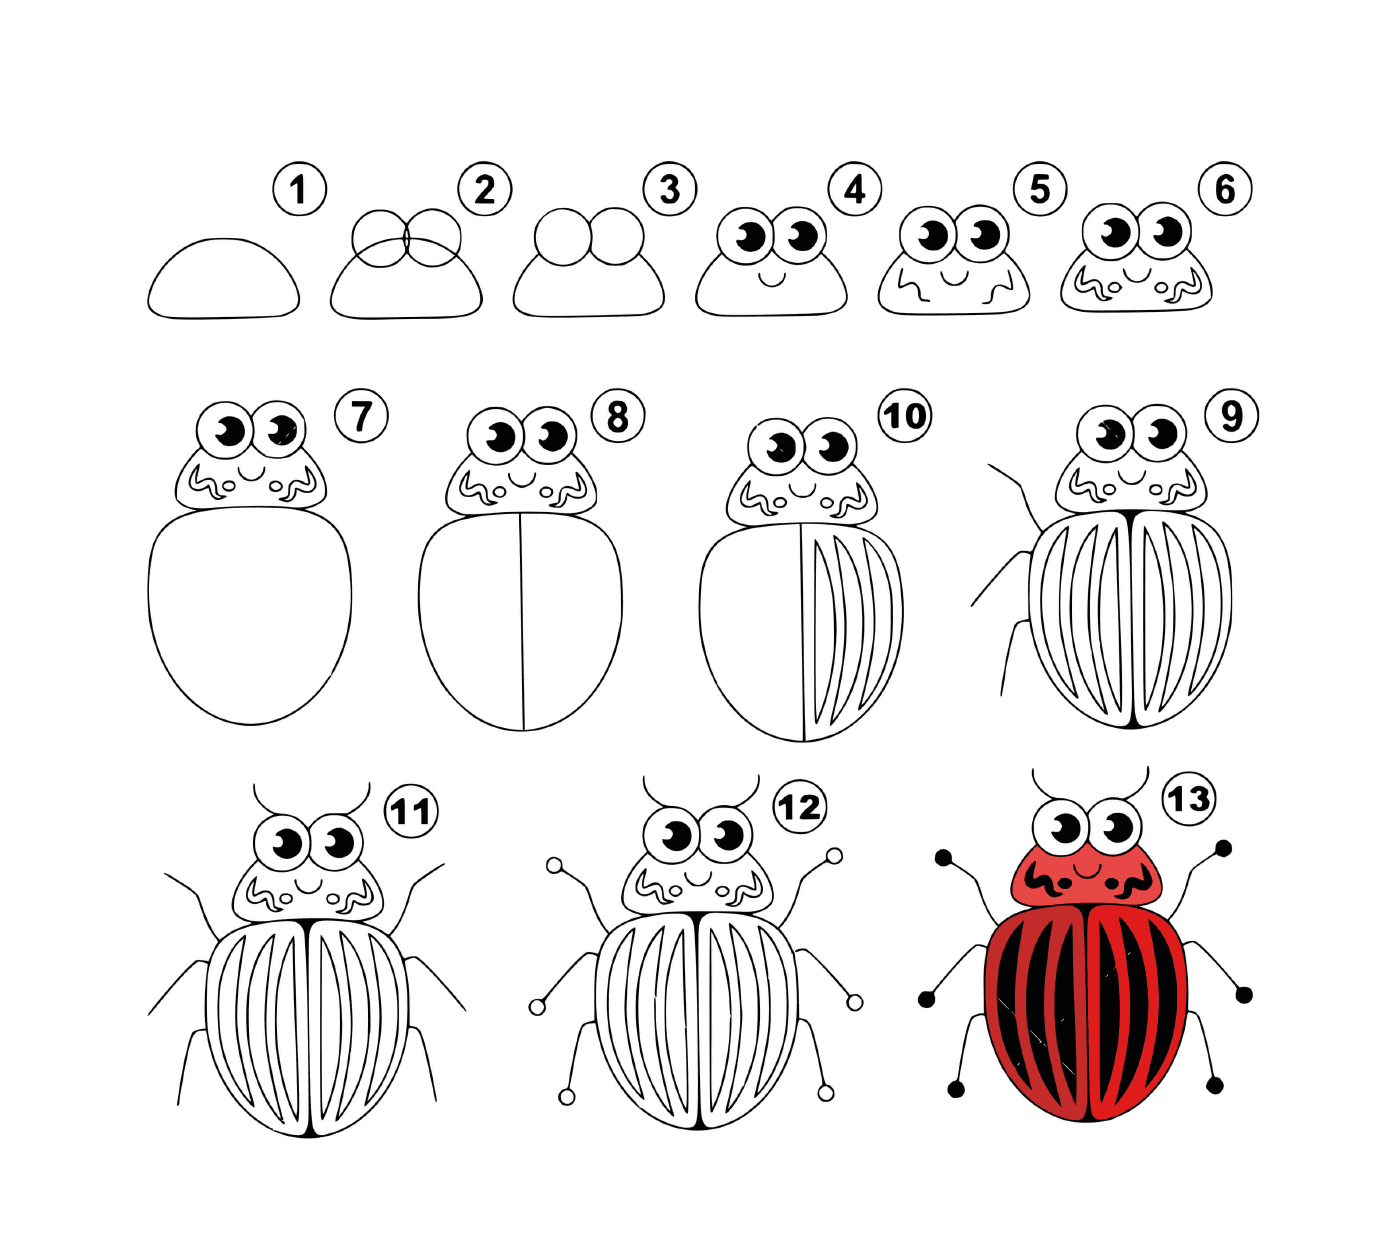  How to draw a ladybug step by step 